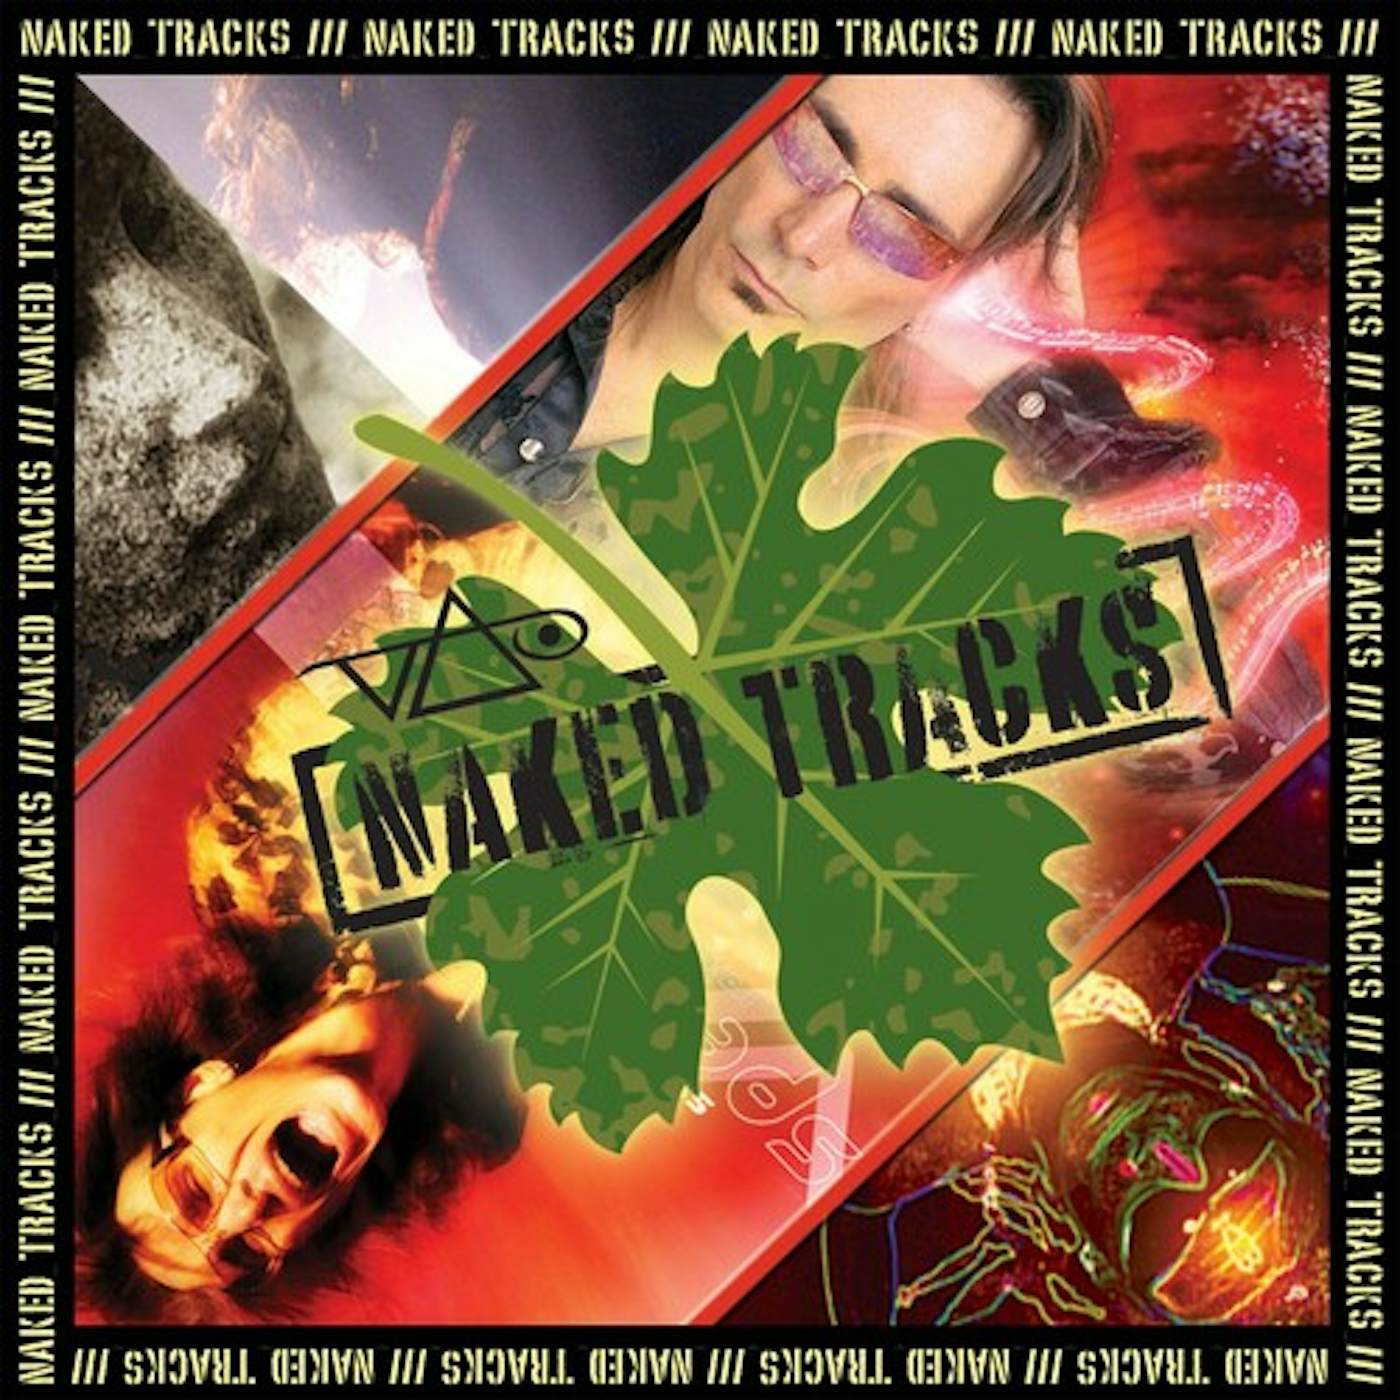 Steve Vai NAKED TRACKS CD